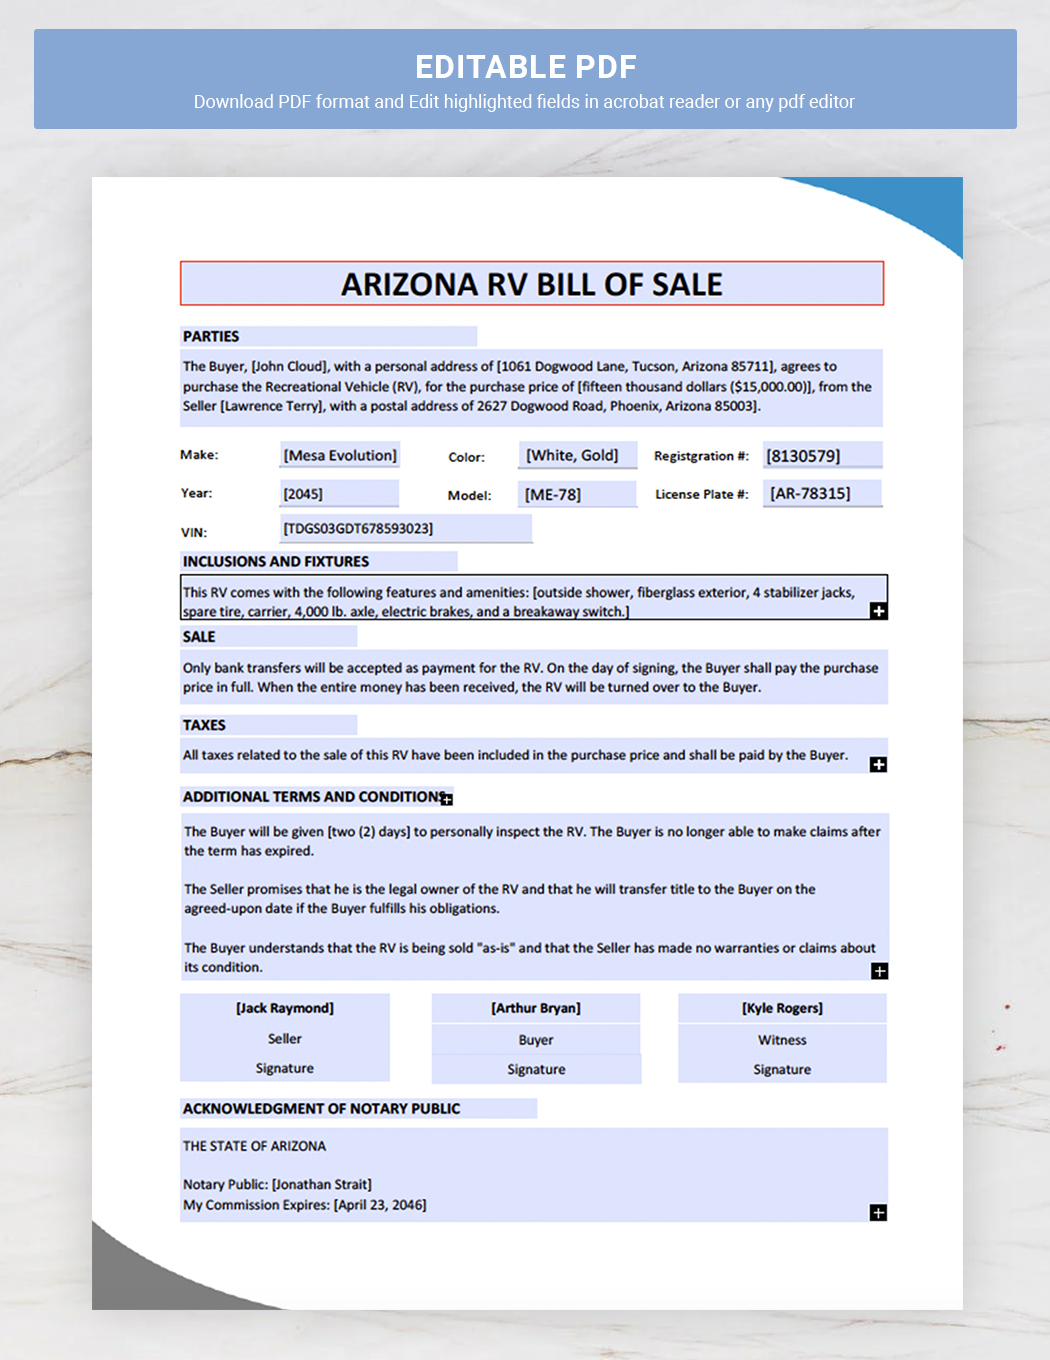 Arizona RV Bill of Sale Template